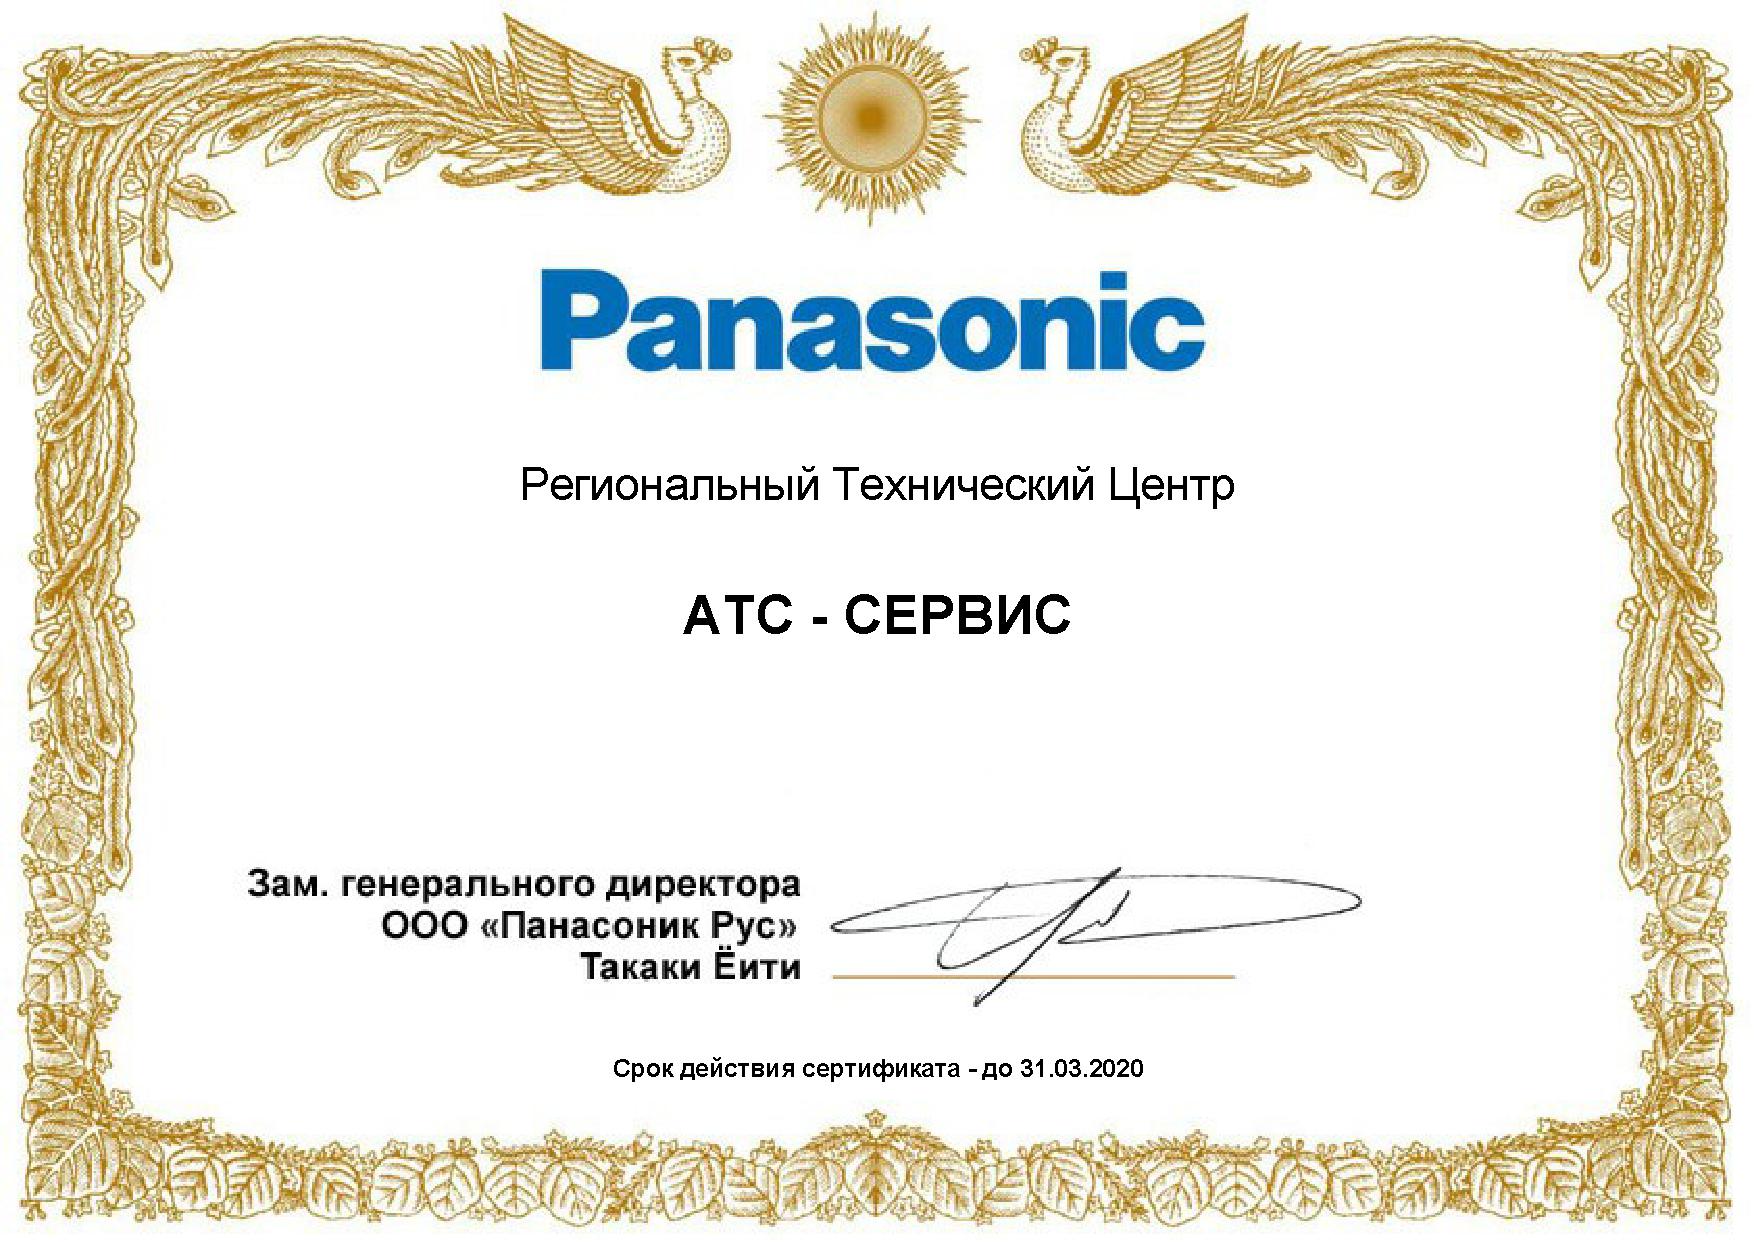 Сертификат технического центра